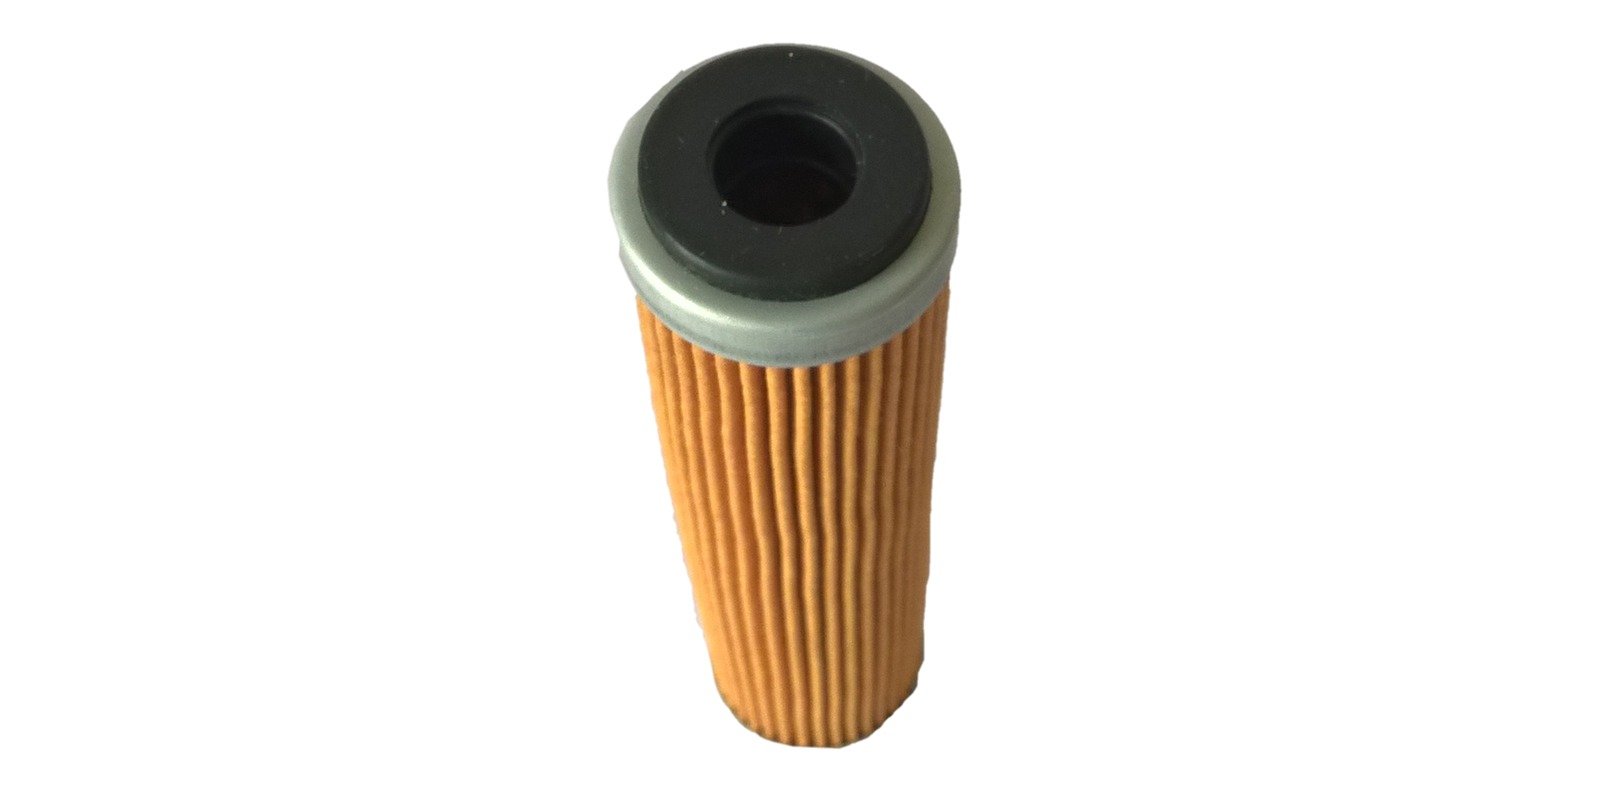 Obrázek produktu Olejový filtr ekvivalent HF631, Q-TECH MHF-631